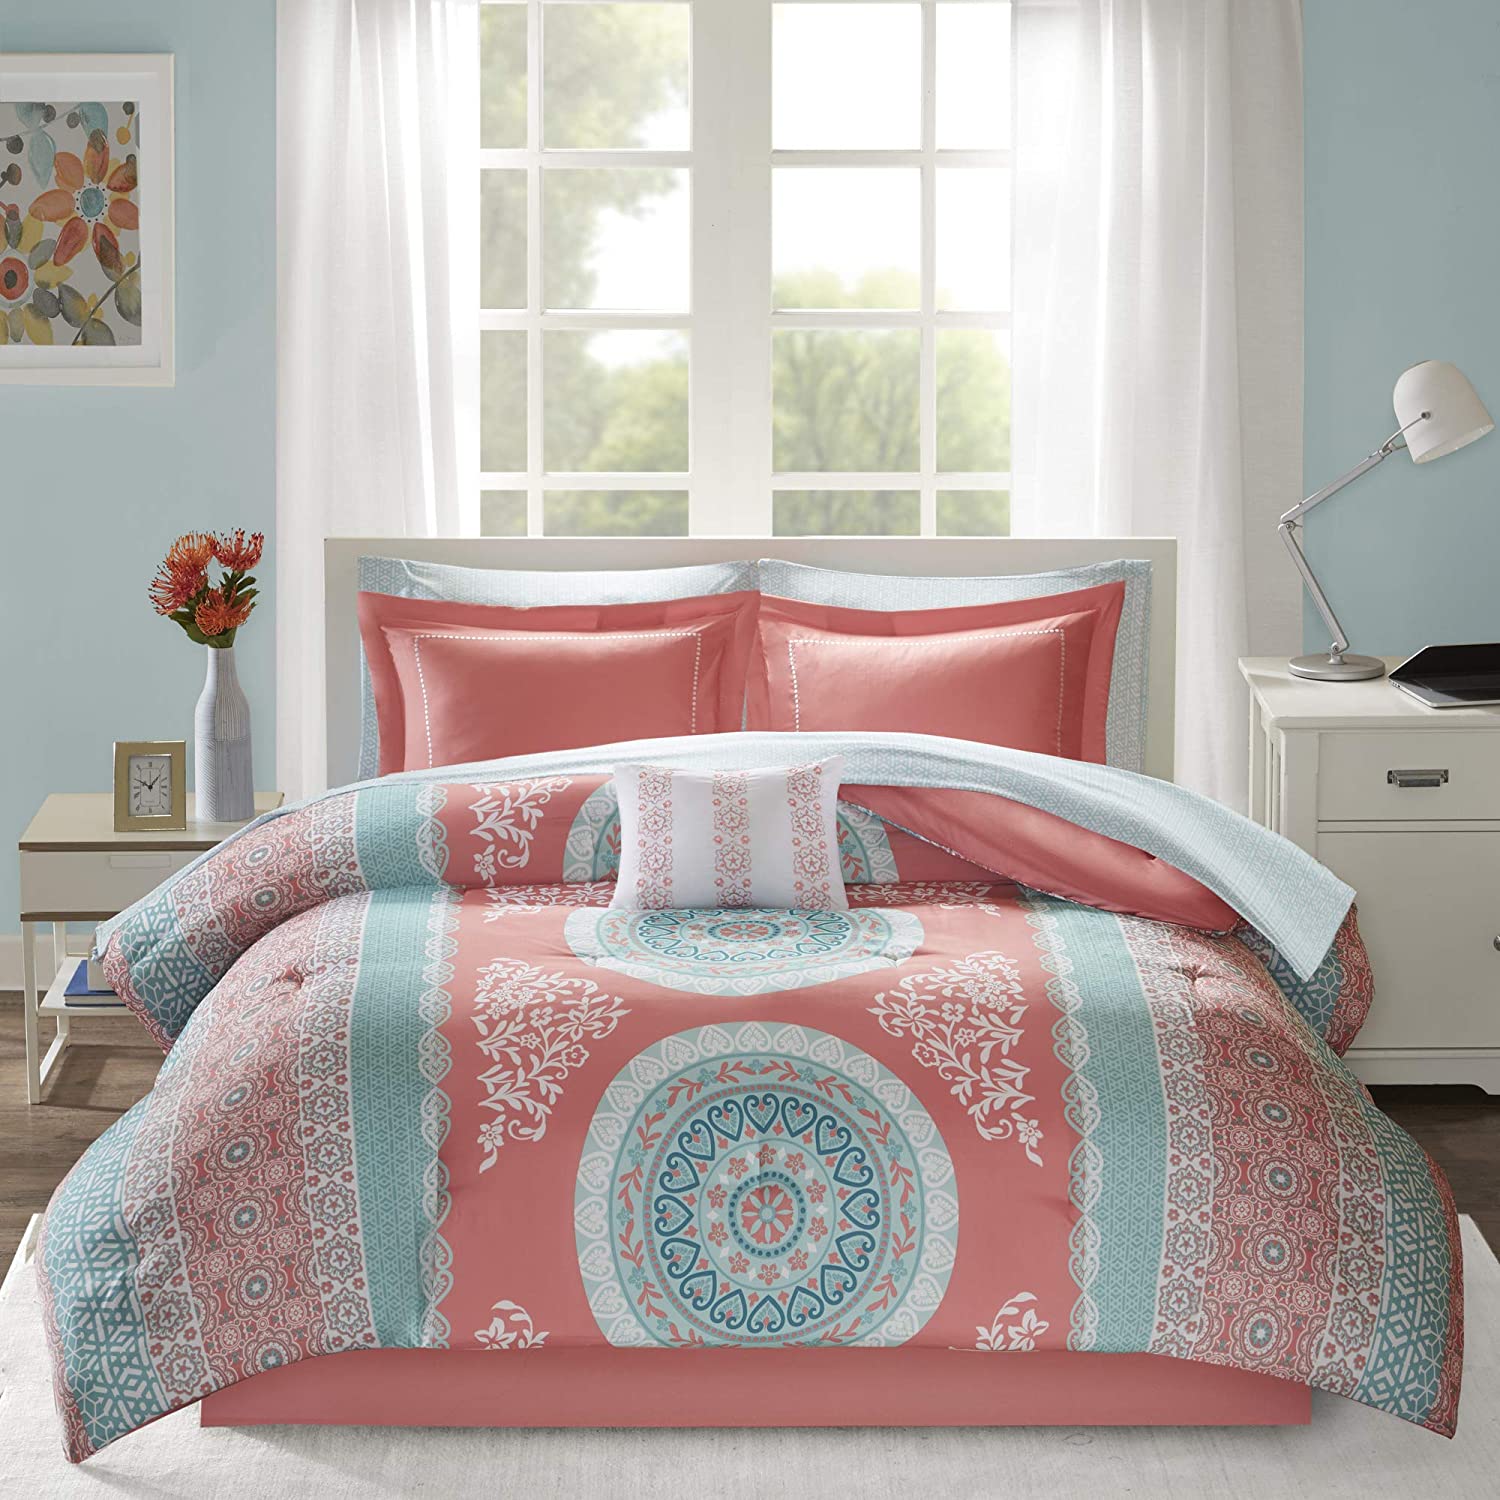 Intelligent Design Boho Chic Full Size Bed Set, 9-Piece